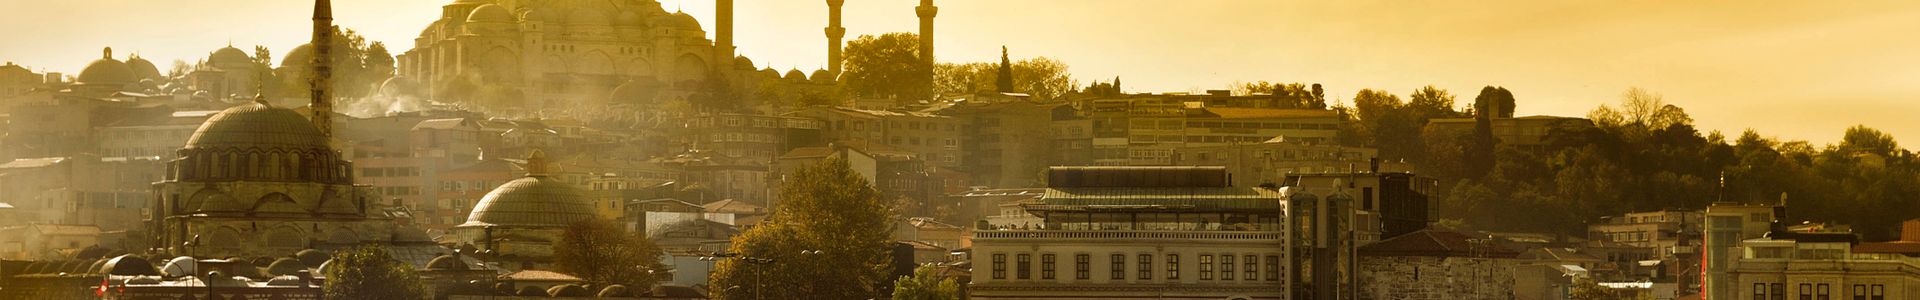 suleymaniye-istanbul-2-thinkstock-jpg.jpg